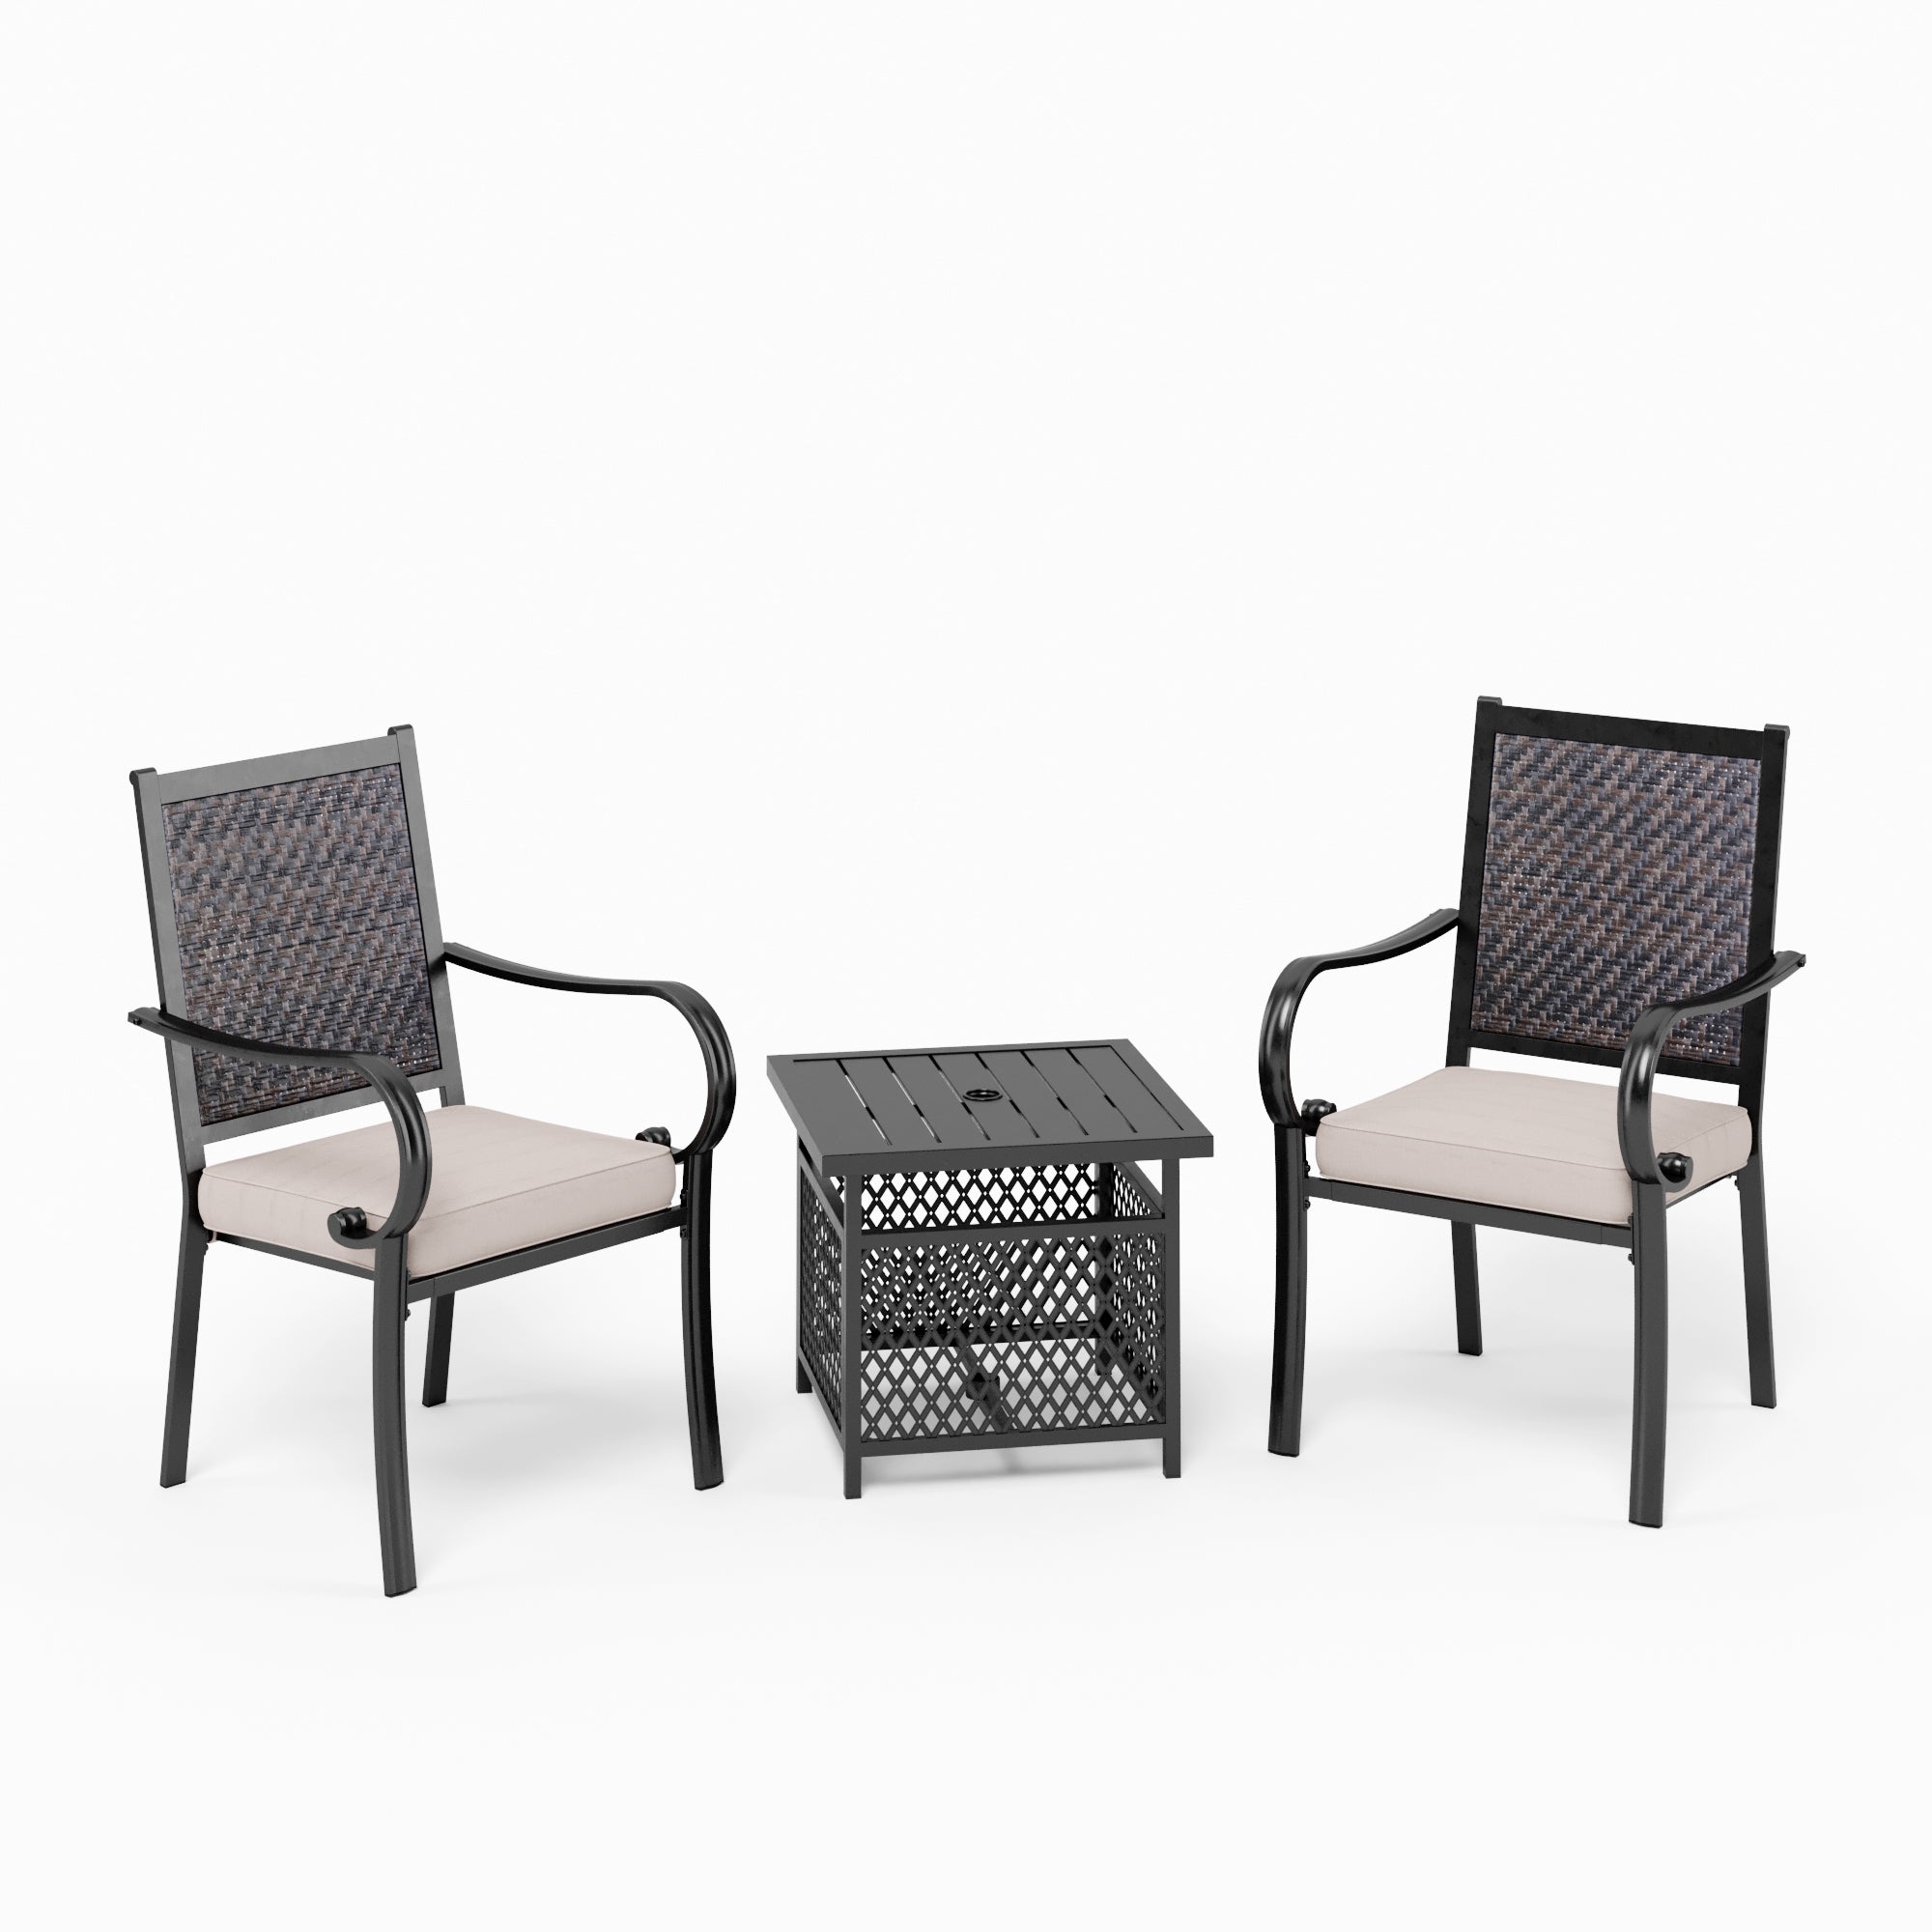 PHI VILLA 3-Piece Rattan Dining Chairs & Umbrella Base Table Patio Bistro Set